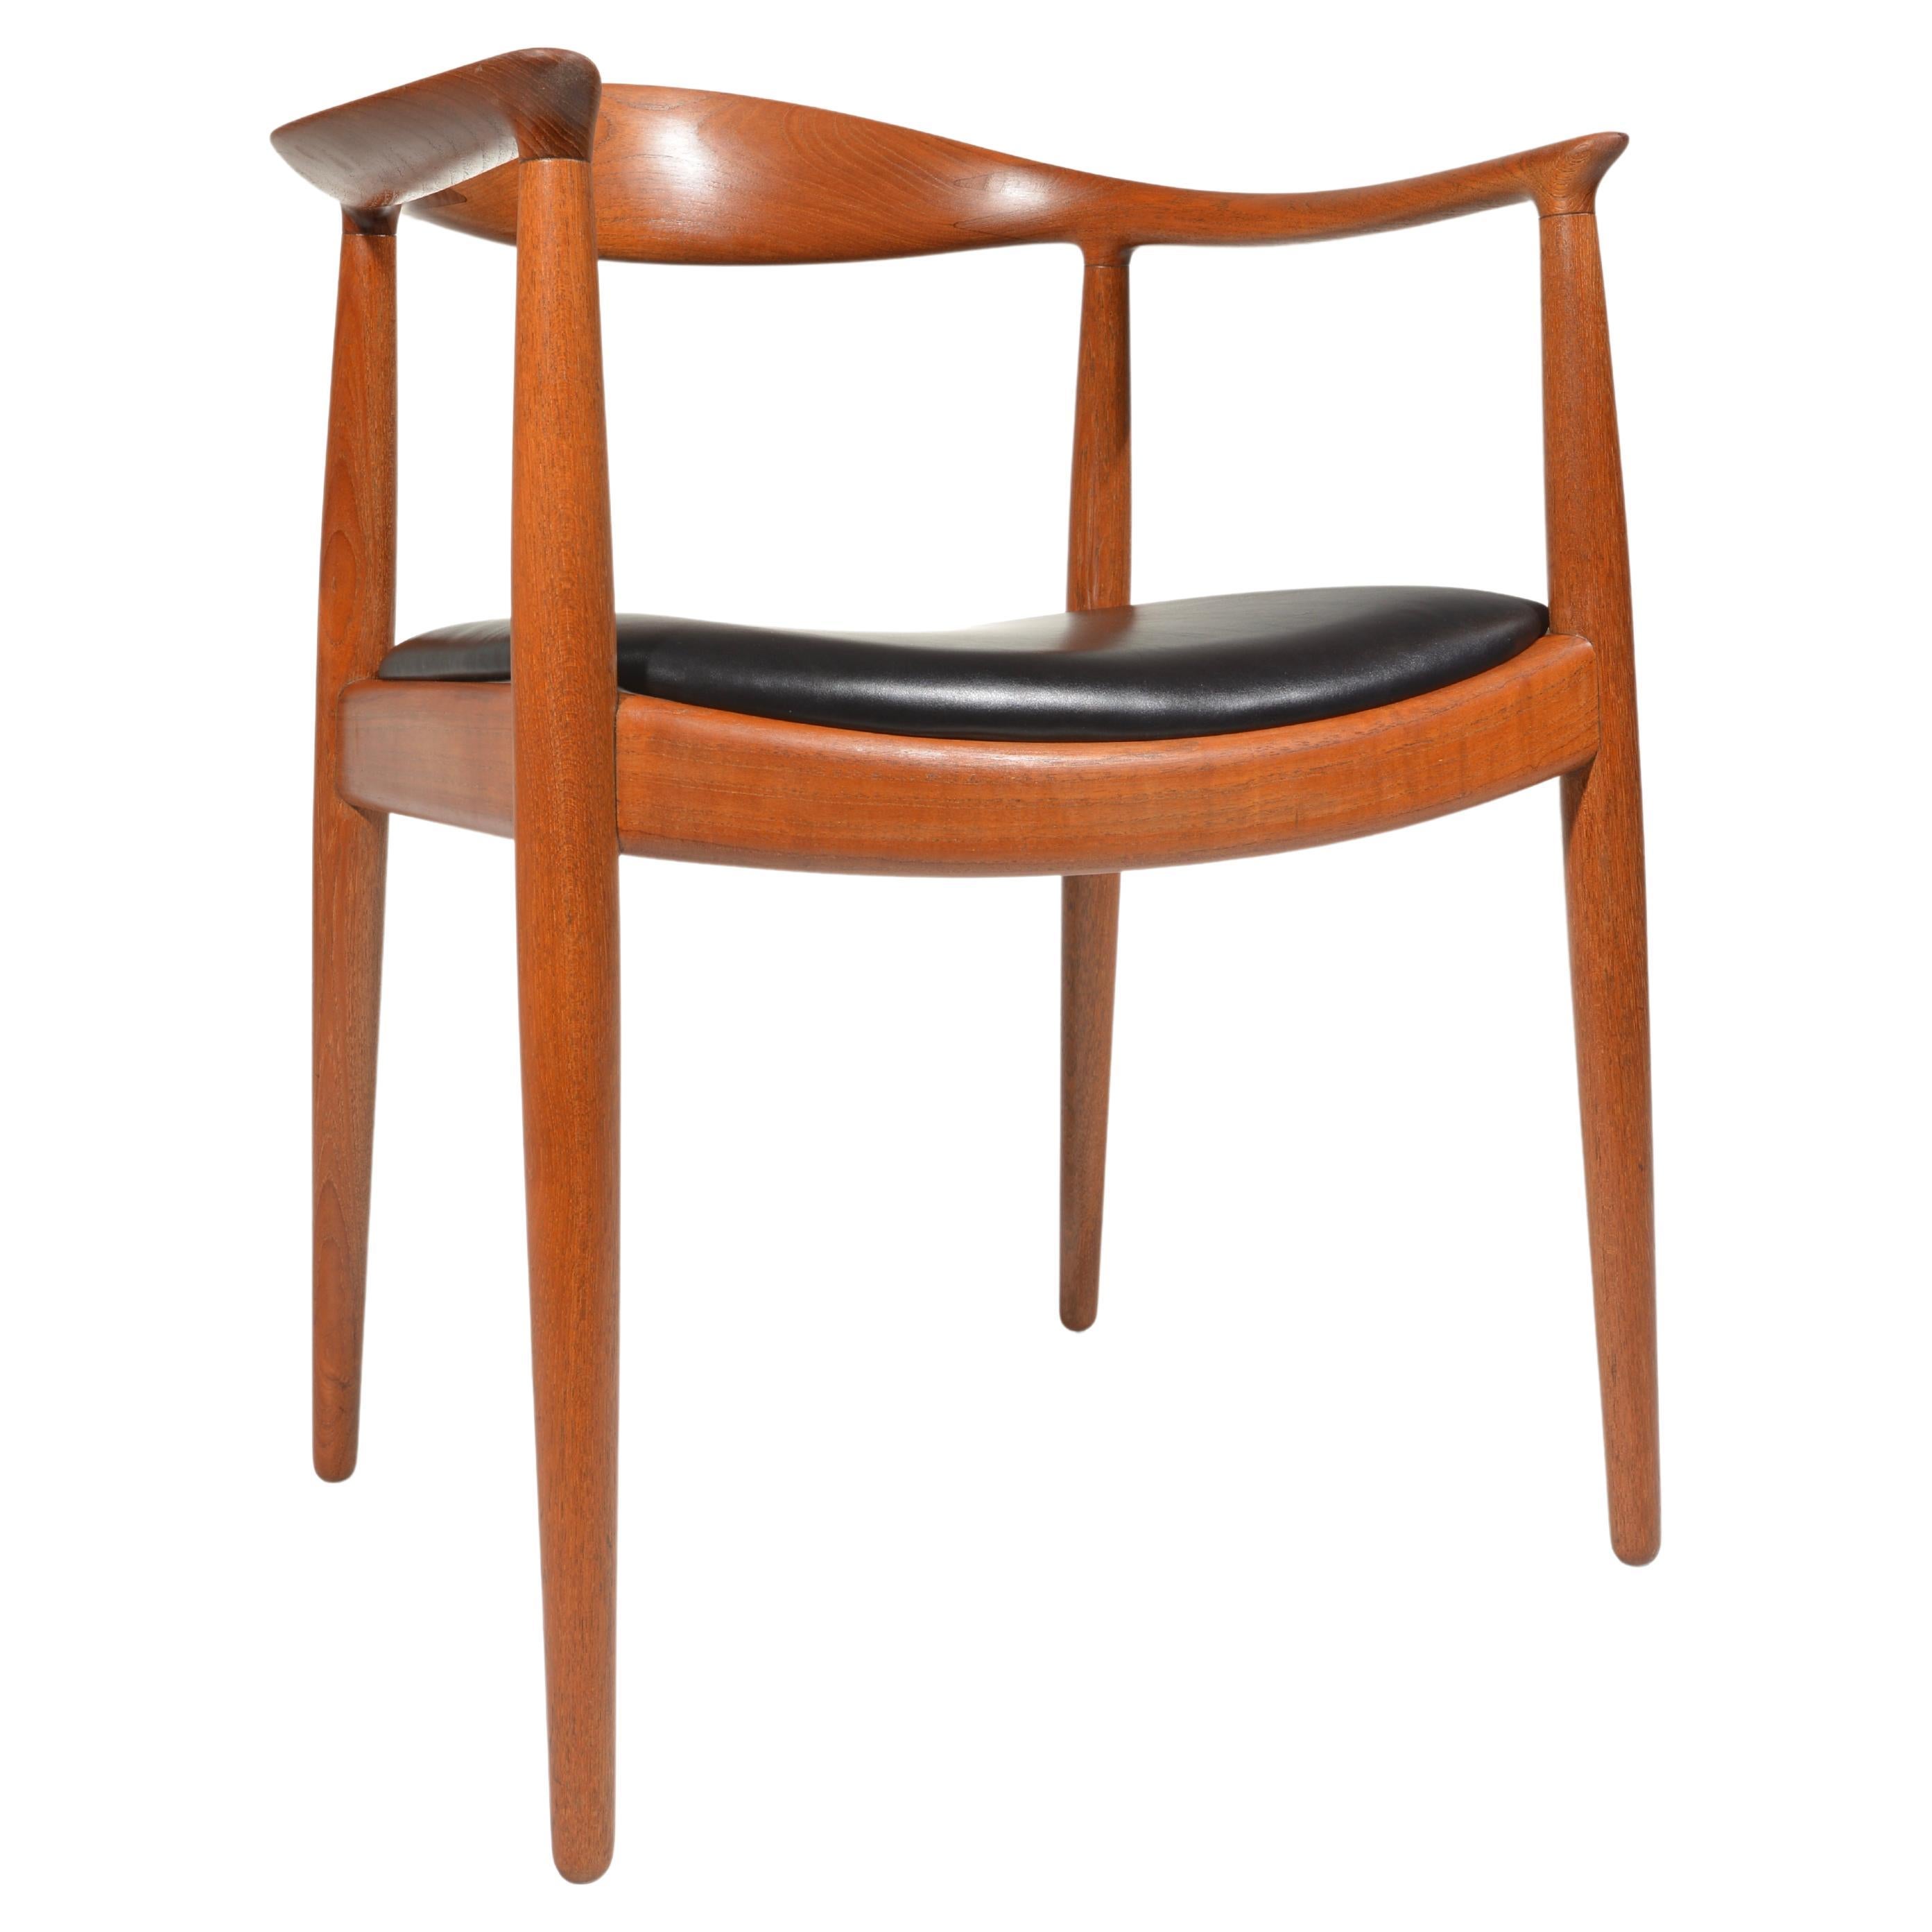 5 Hans Wegner for Johannes Hansen JH-503 Chairs in Teak and Leather For Sale